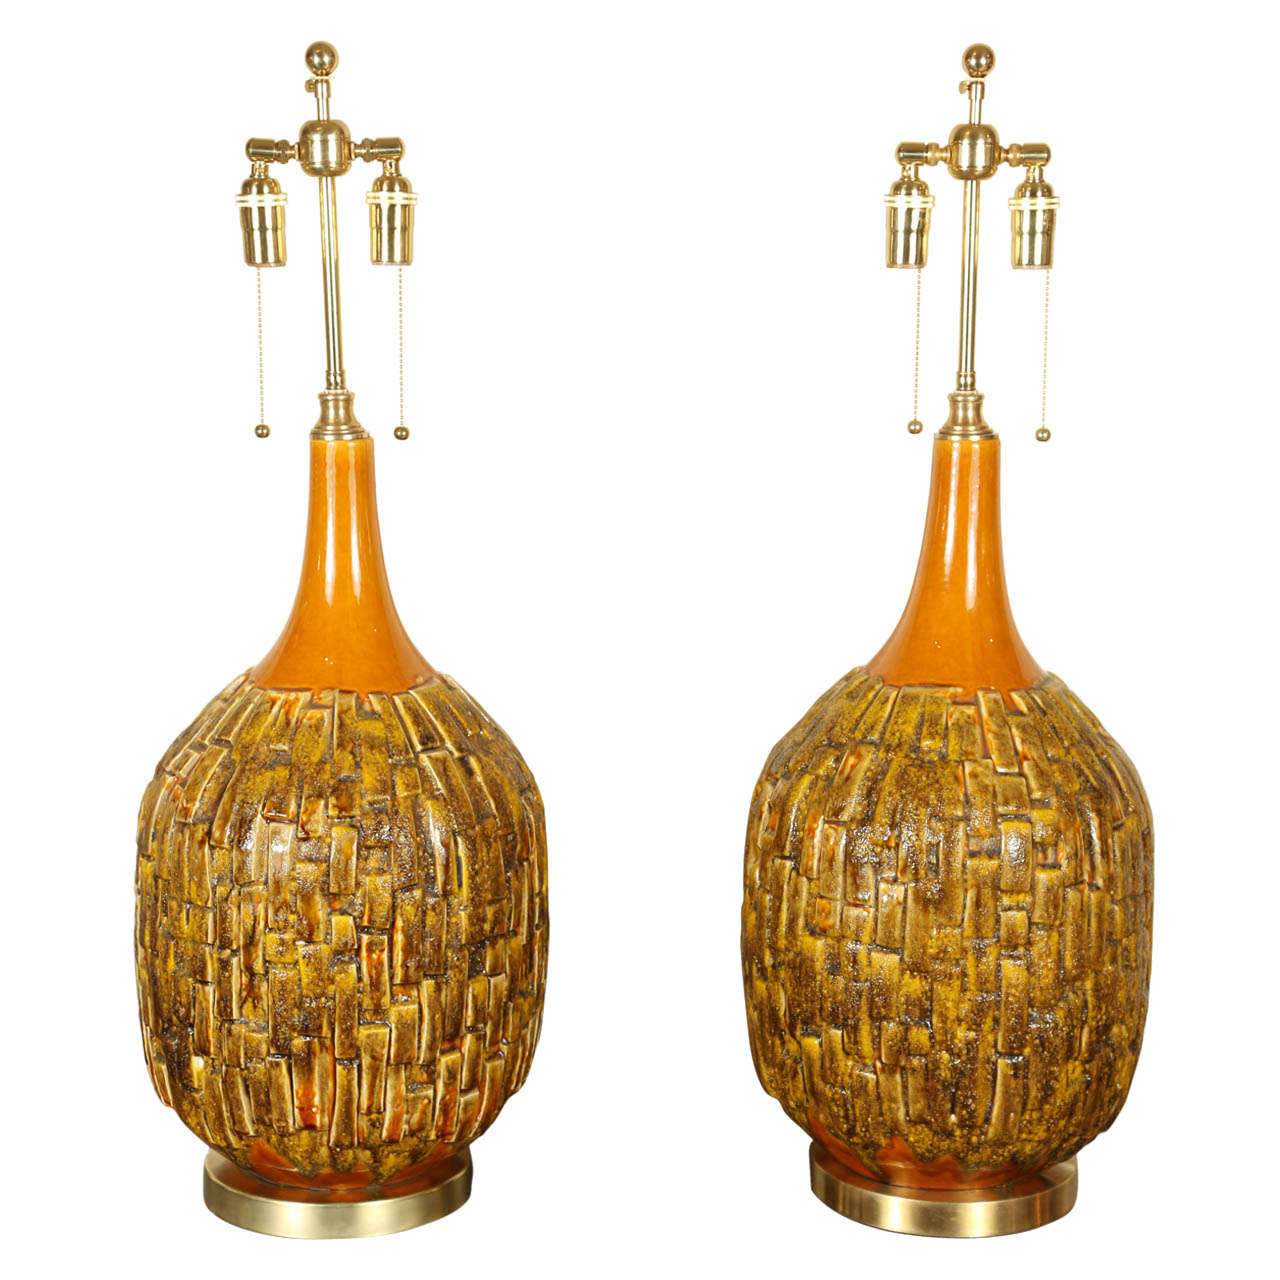 Pair of Large Stylish Mid-Century Ceramic Lamps